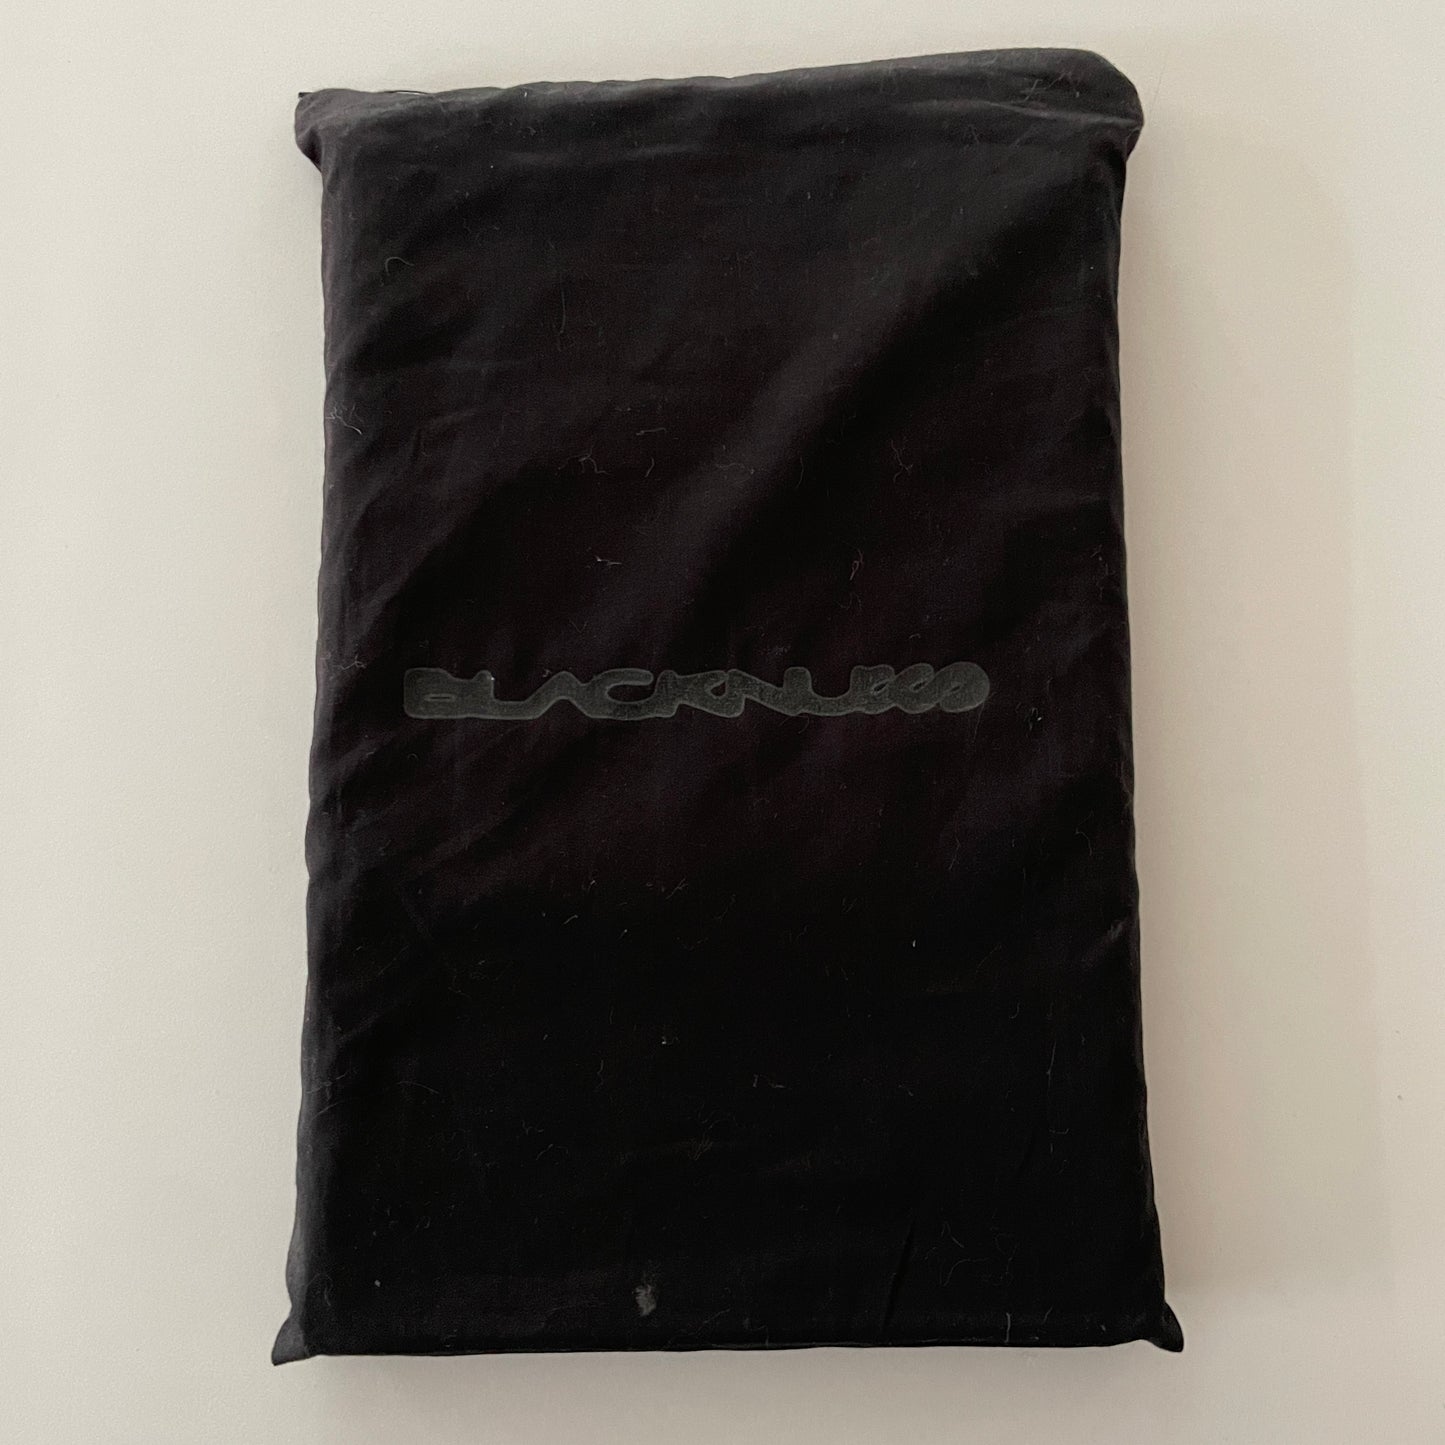 Blacknuss - 2009 Very Limited